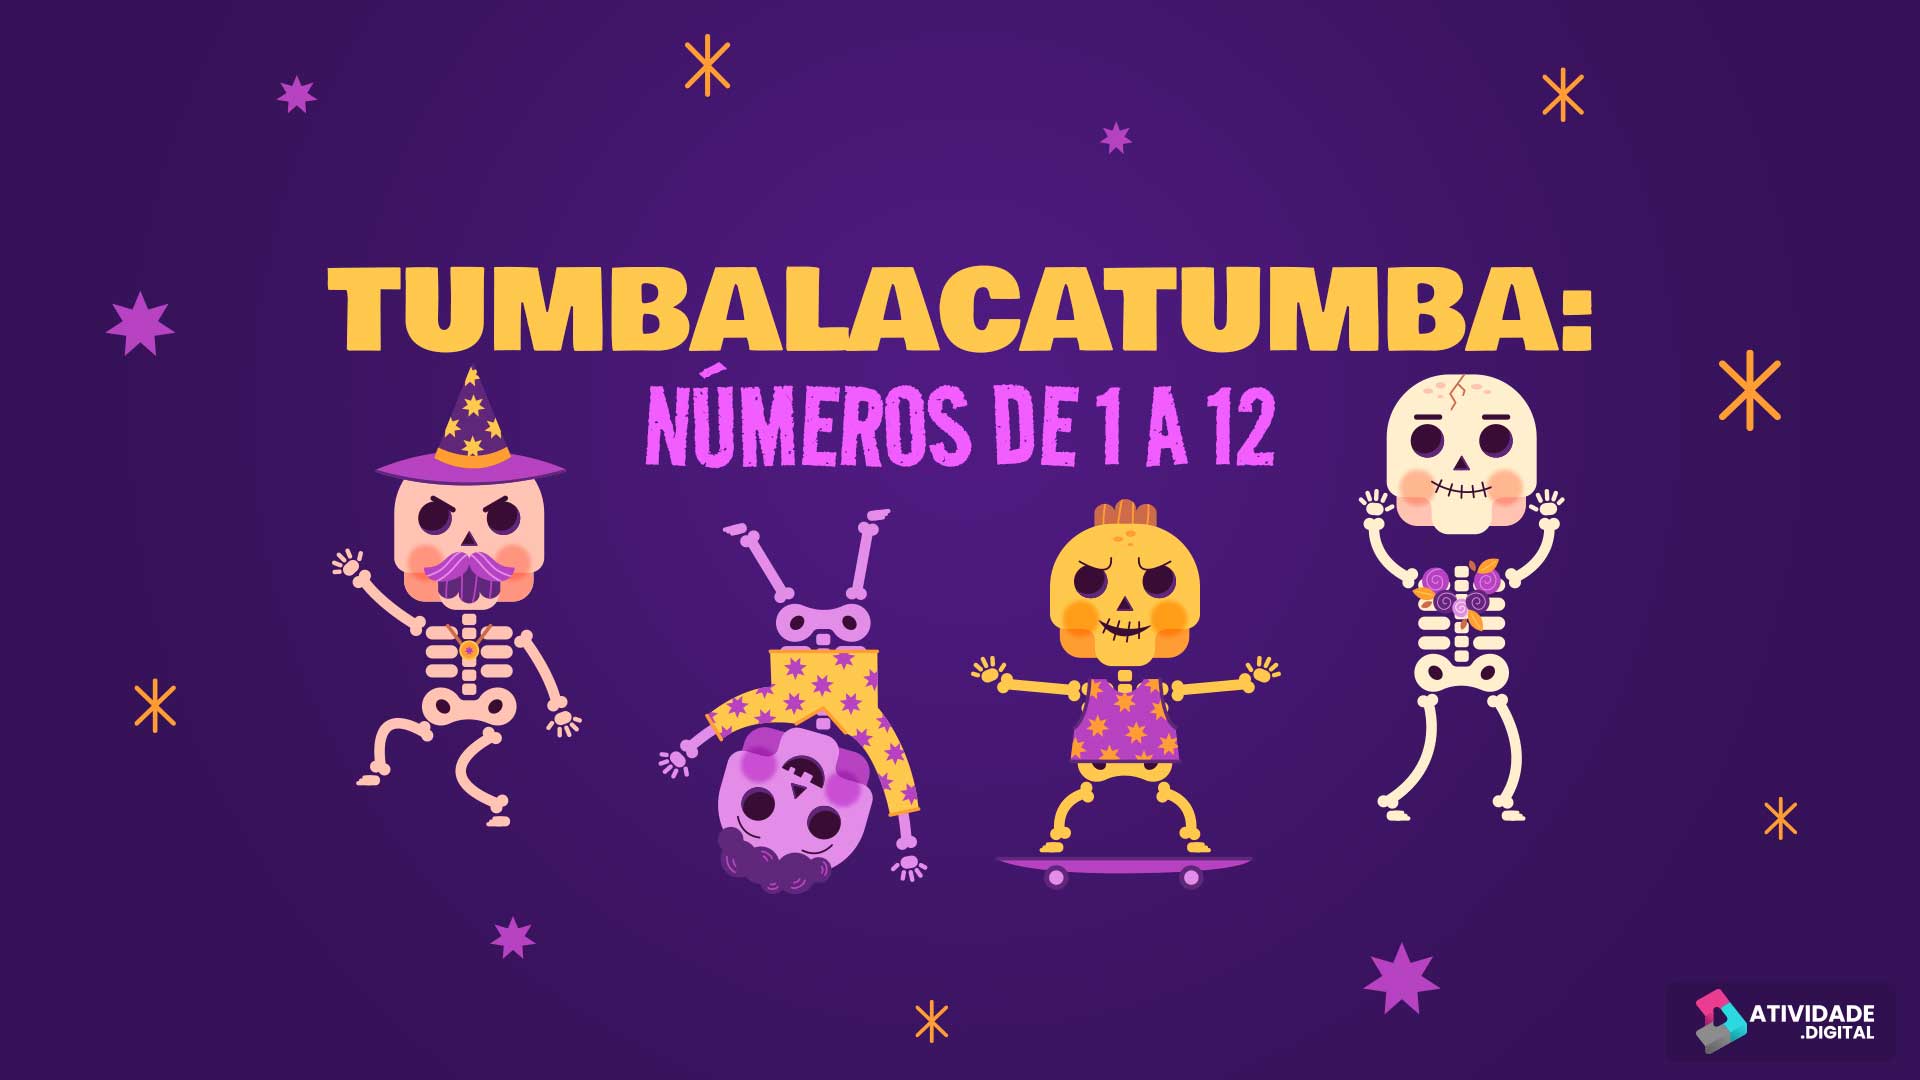 Tumbalacatumba: Números de 1 a 12